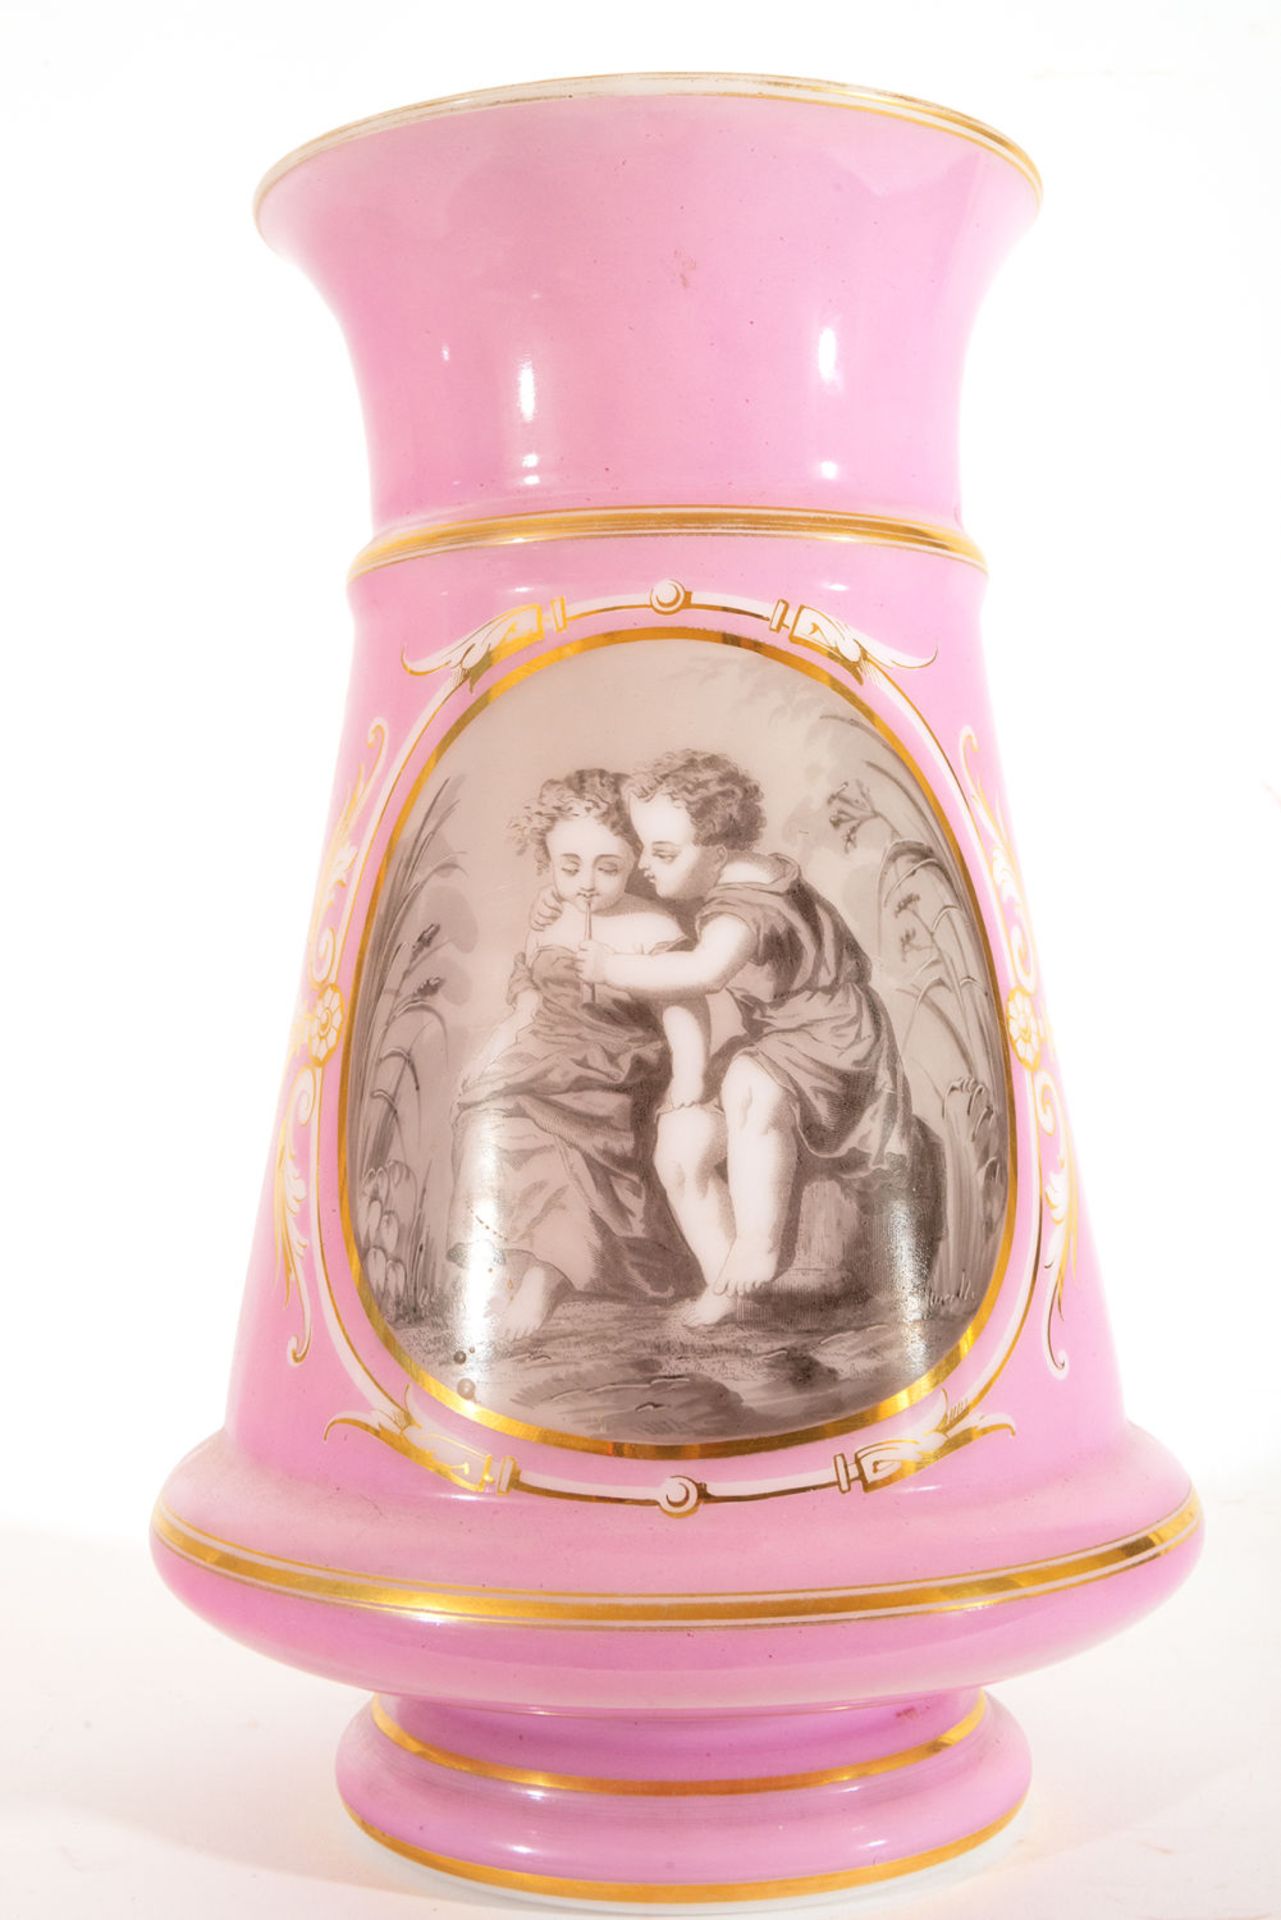 Pair of Opaline Vases with Romantic Scenes, 19th century - Image 3 of 10